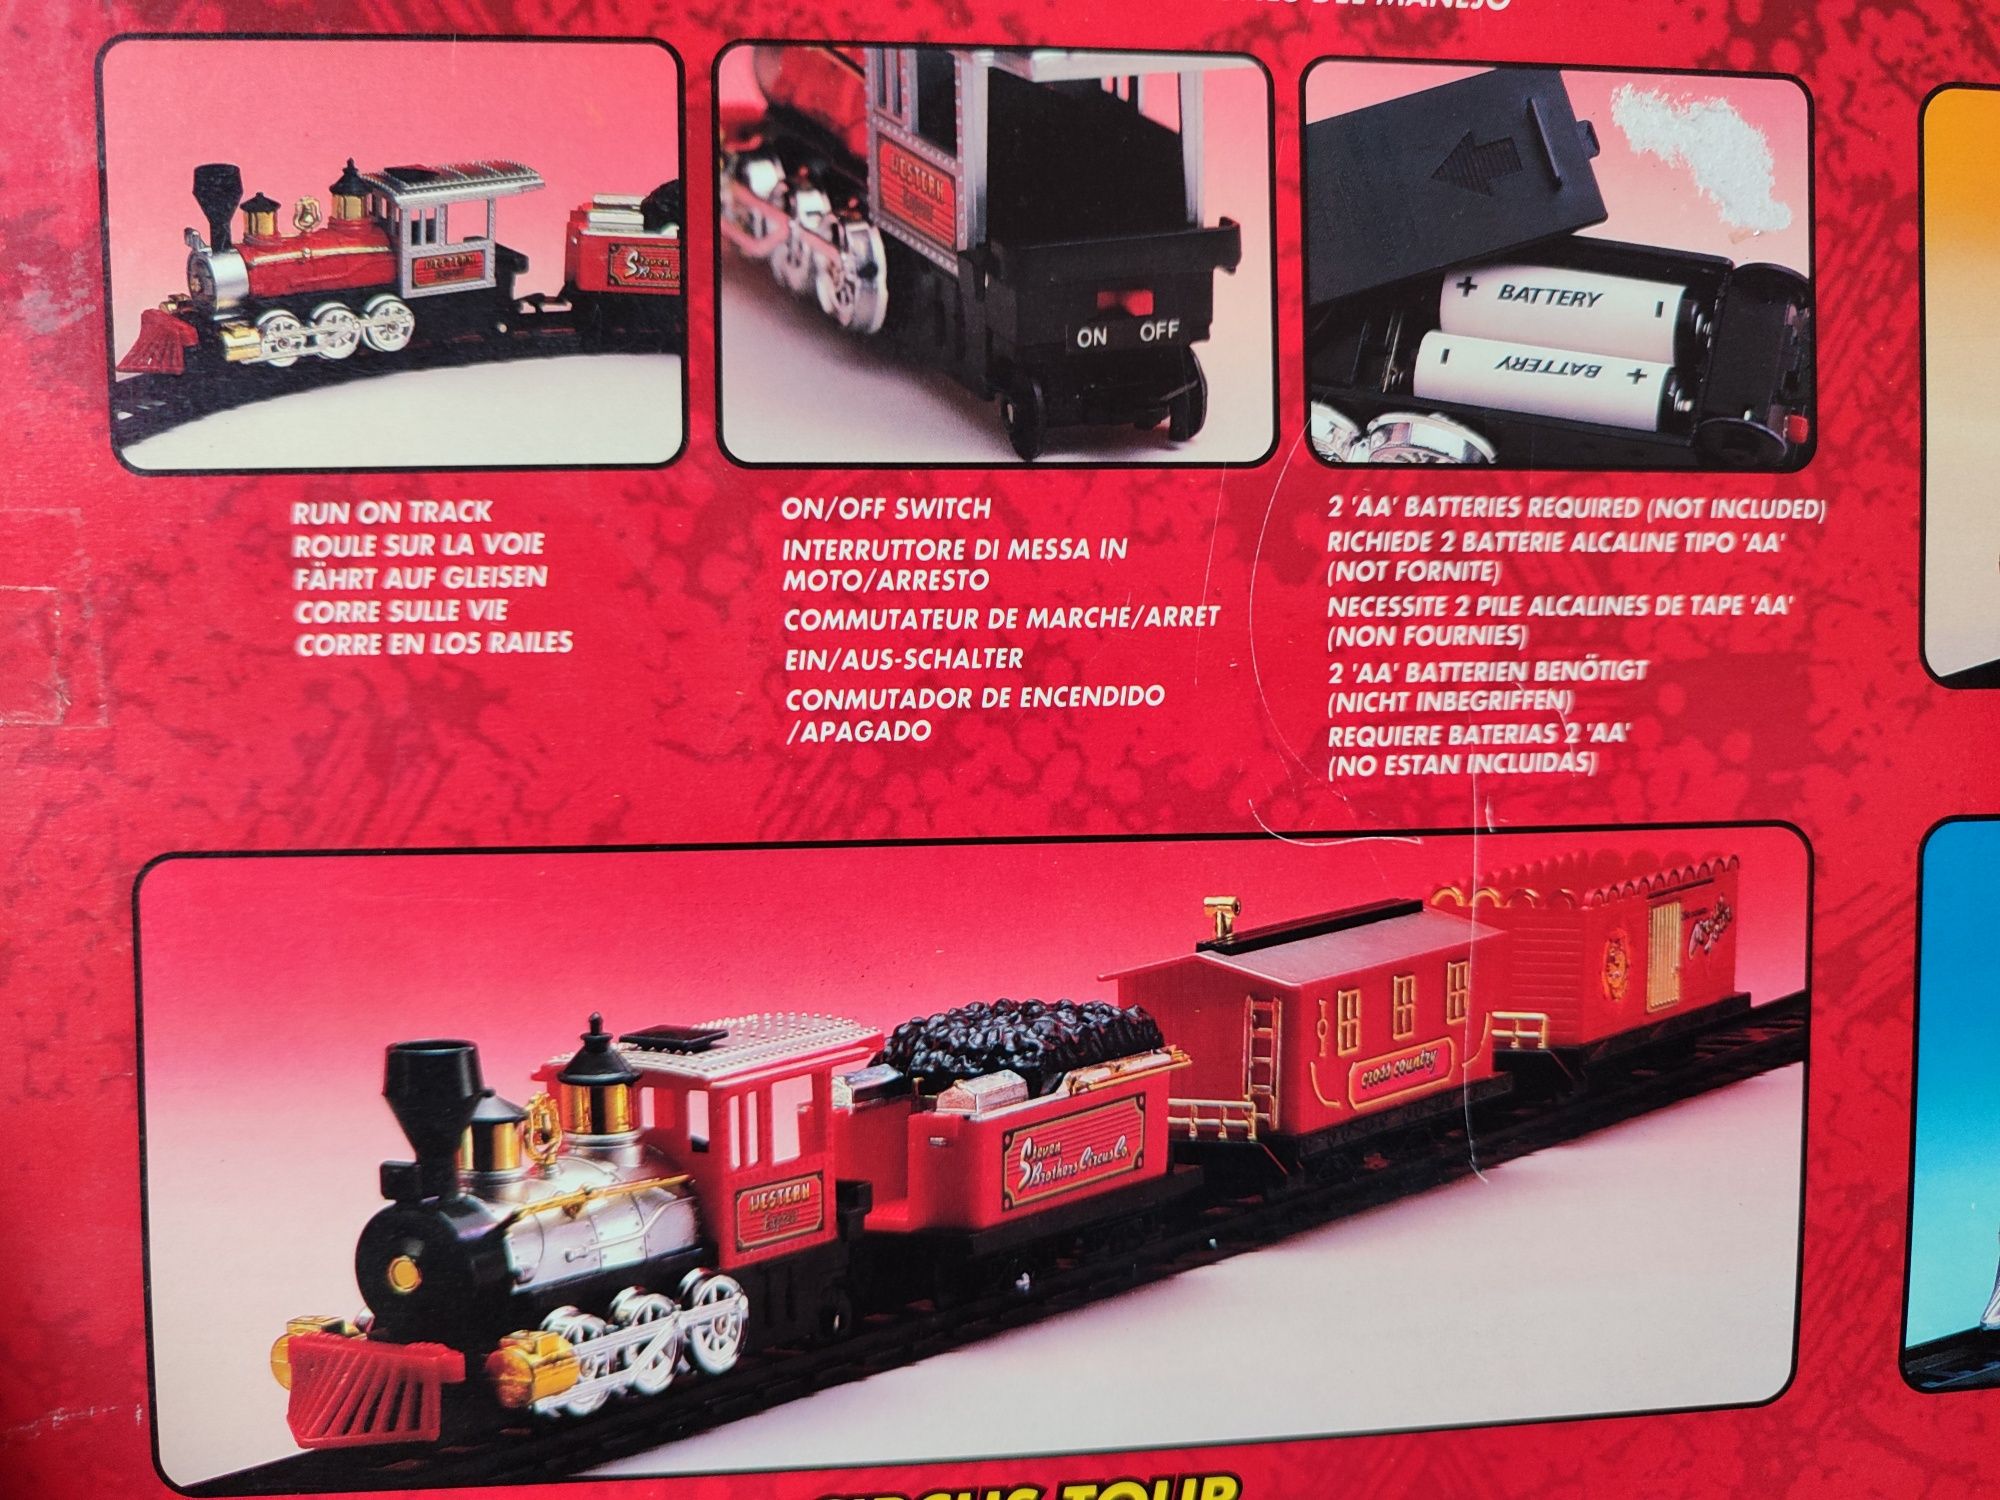 Toy State train set